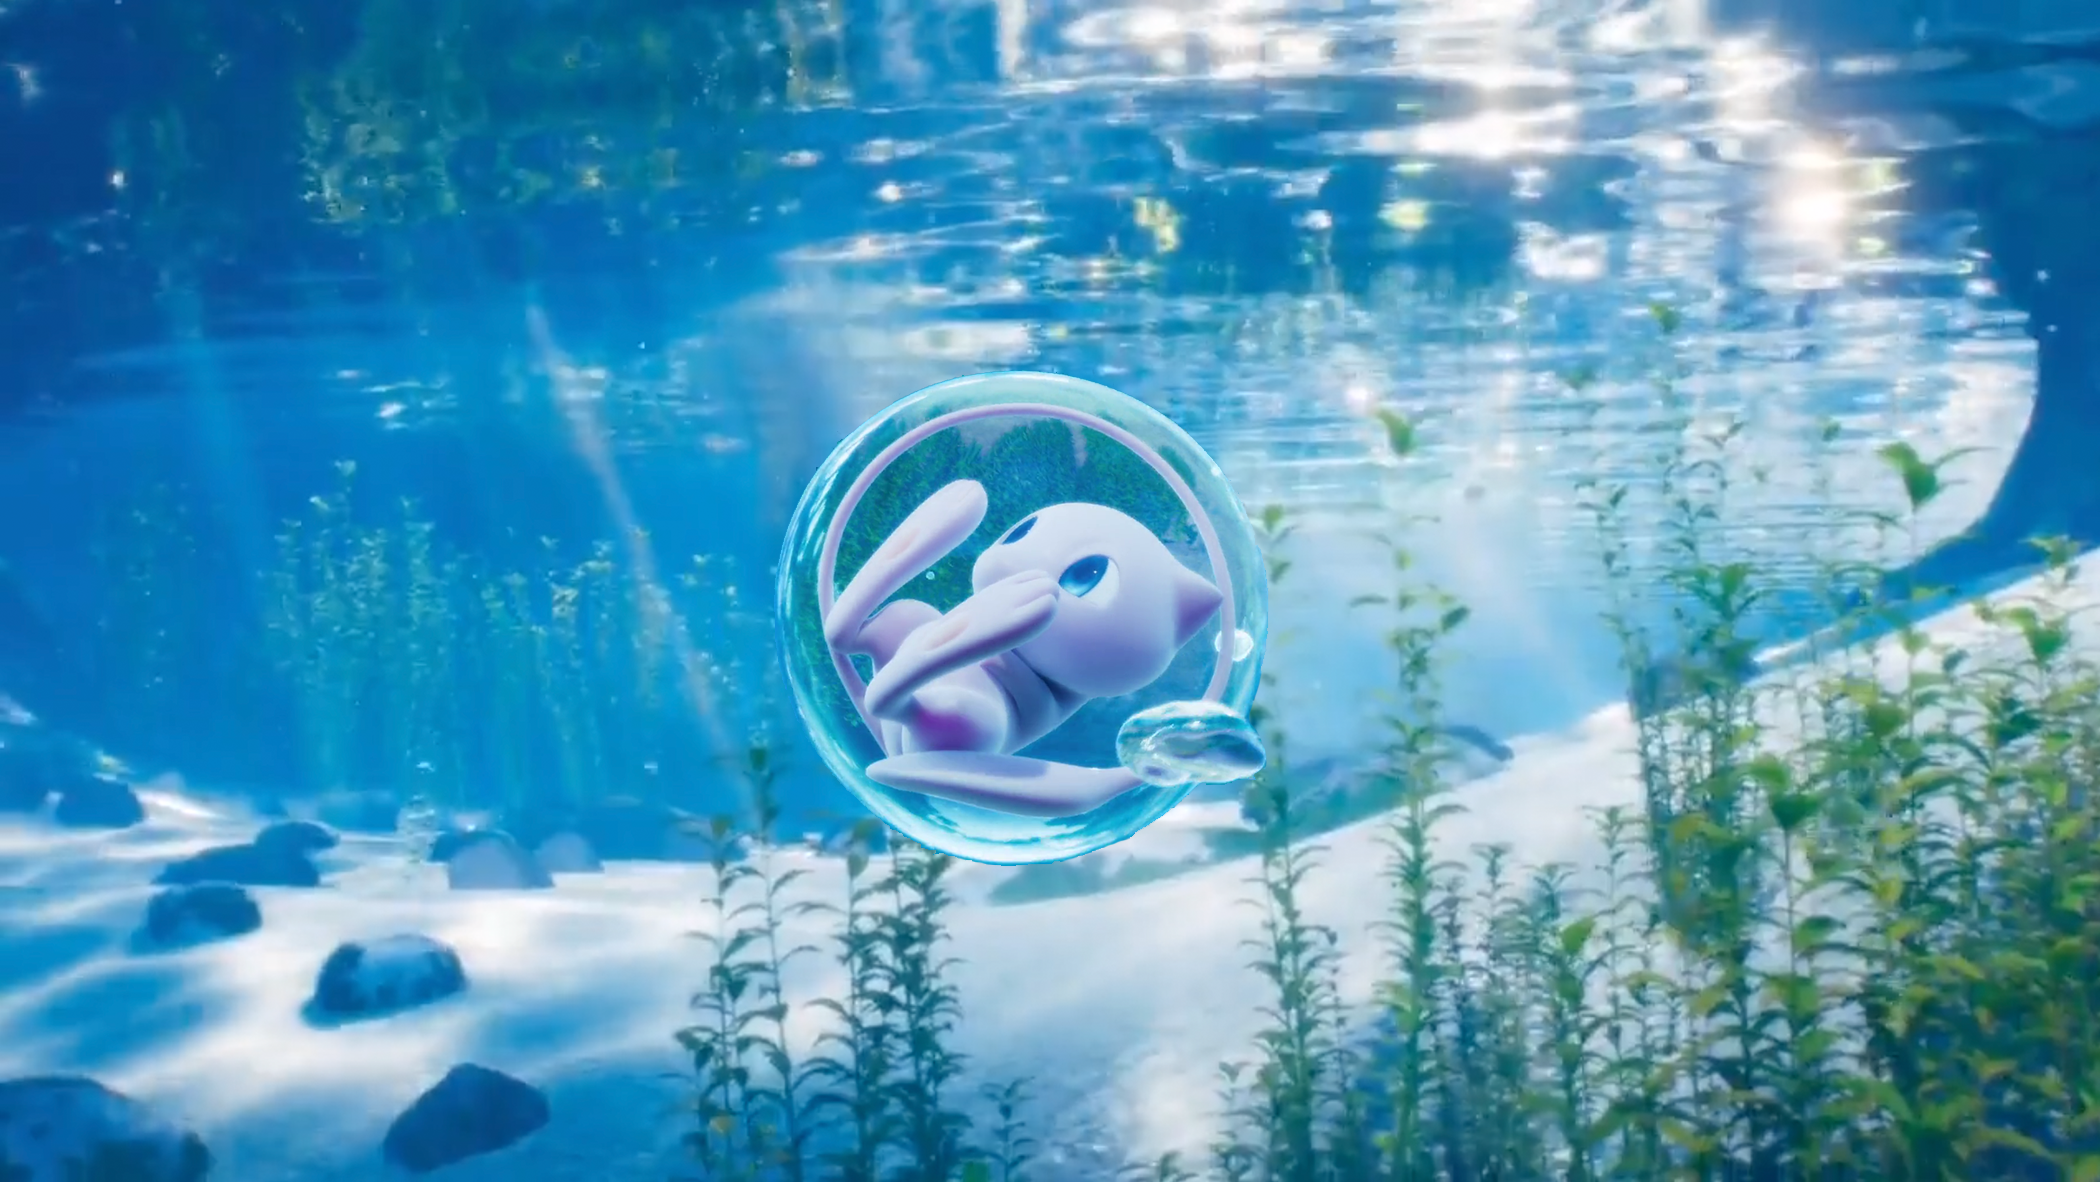 Mew from Pokémon, gracefully swimming underwater in an anime scene from Pokémon: Mewtwo Strikes Back - Evolution. HD desktop wallpaper.